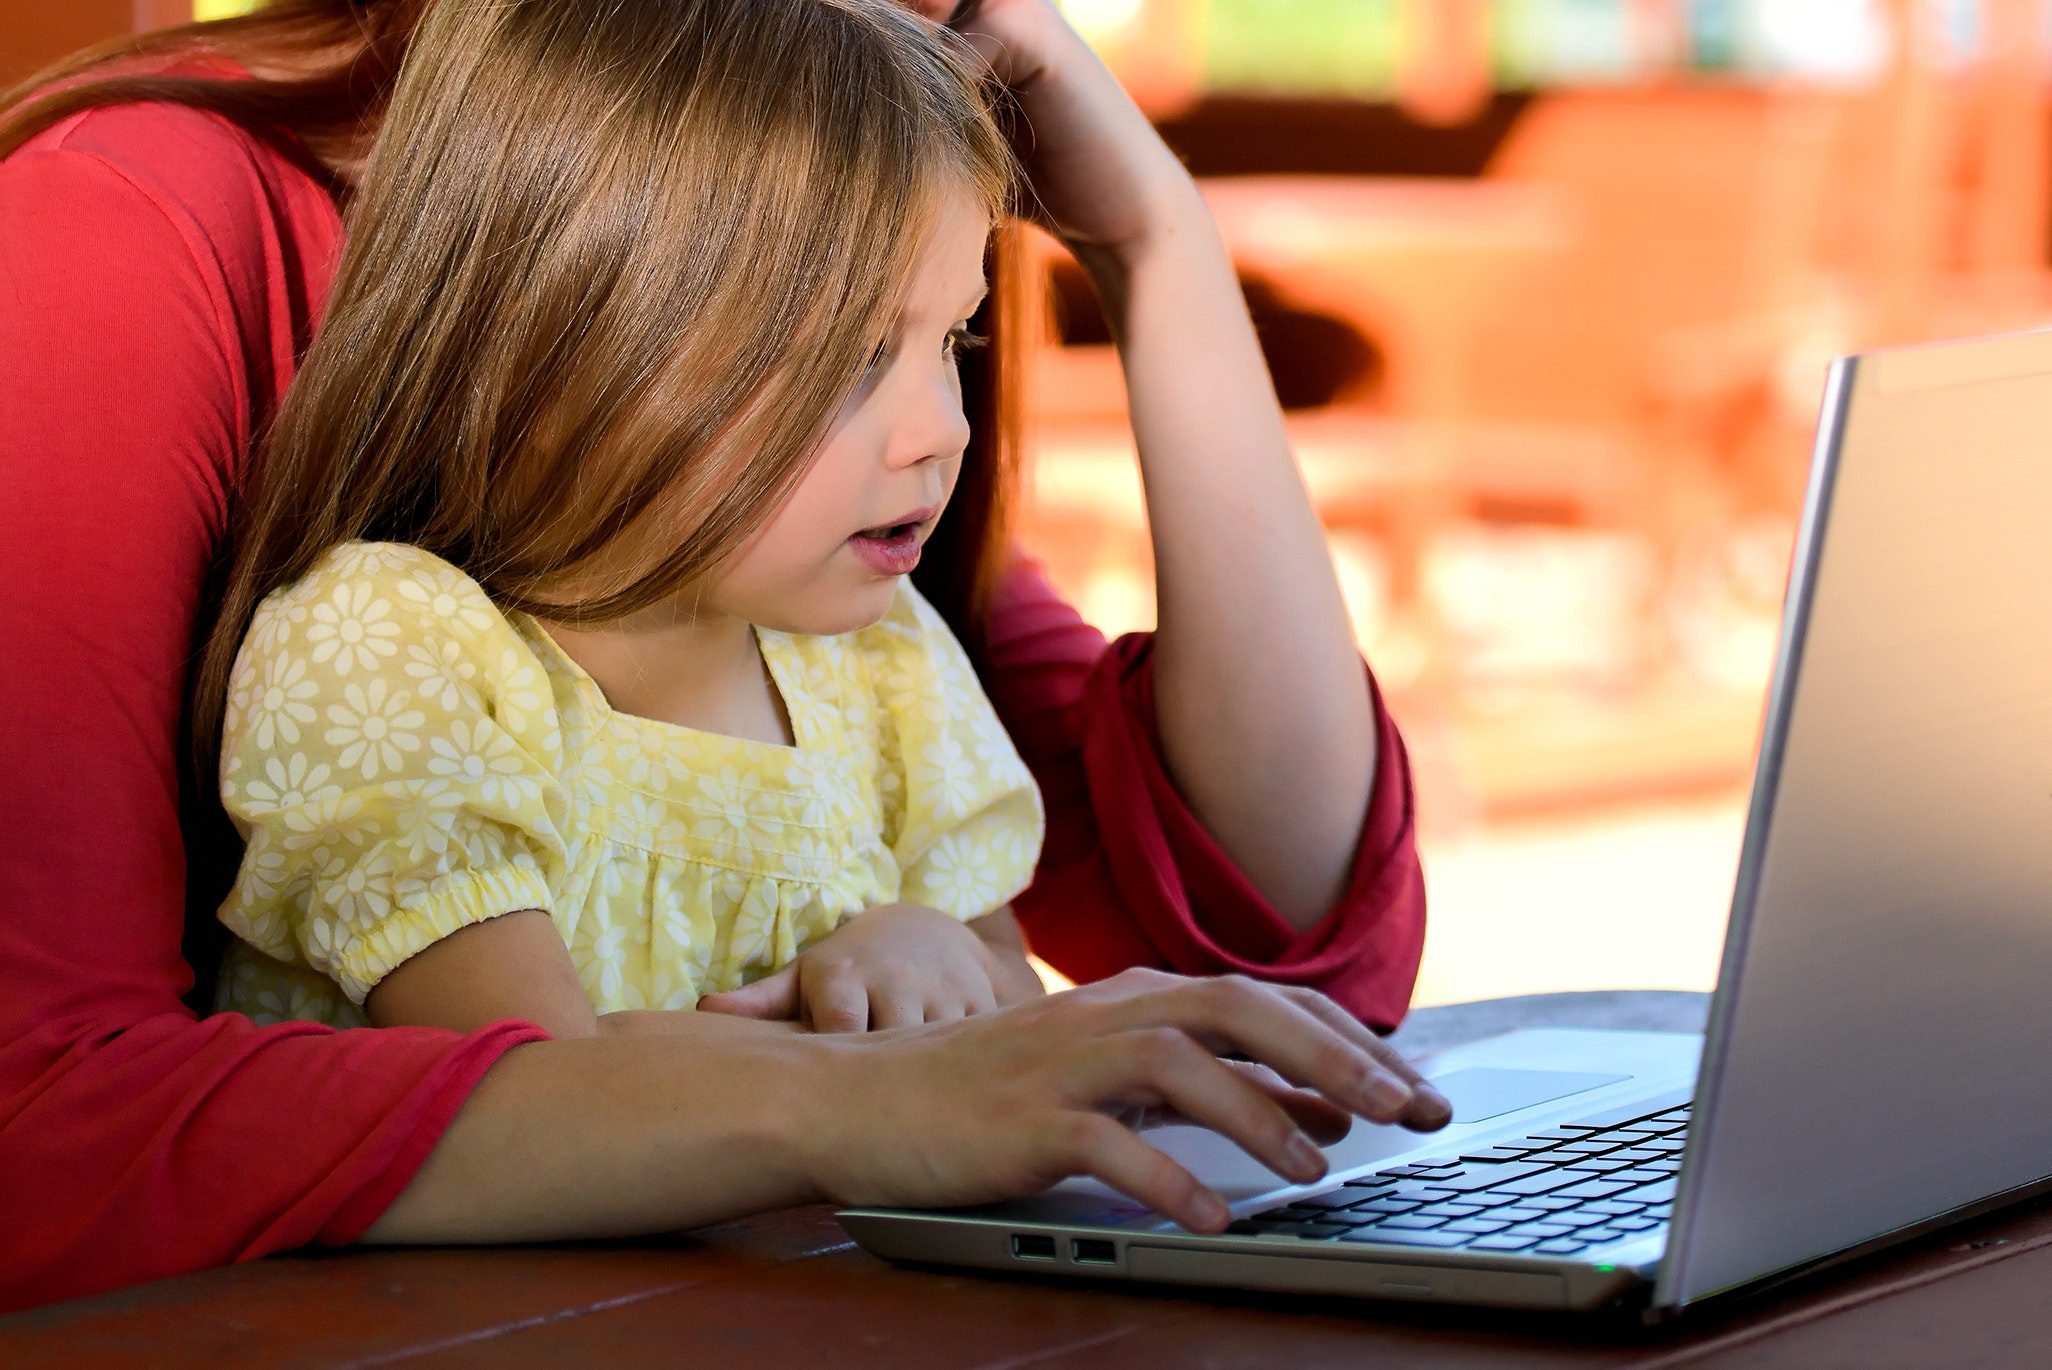 Tips for Parents: Promoting Internet Safety for Kids